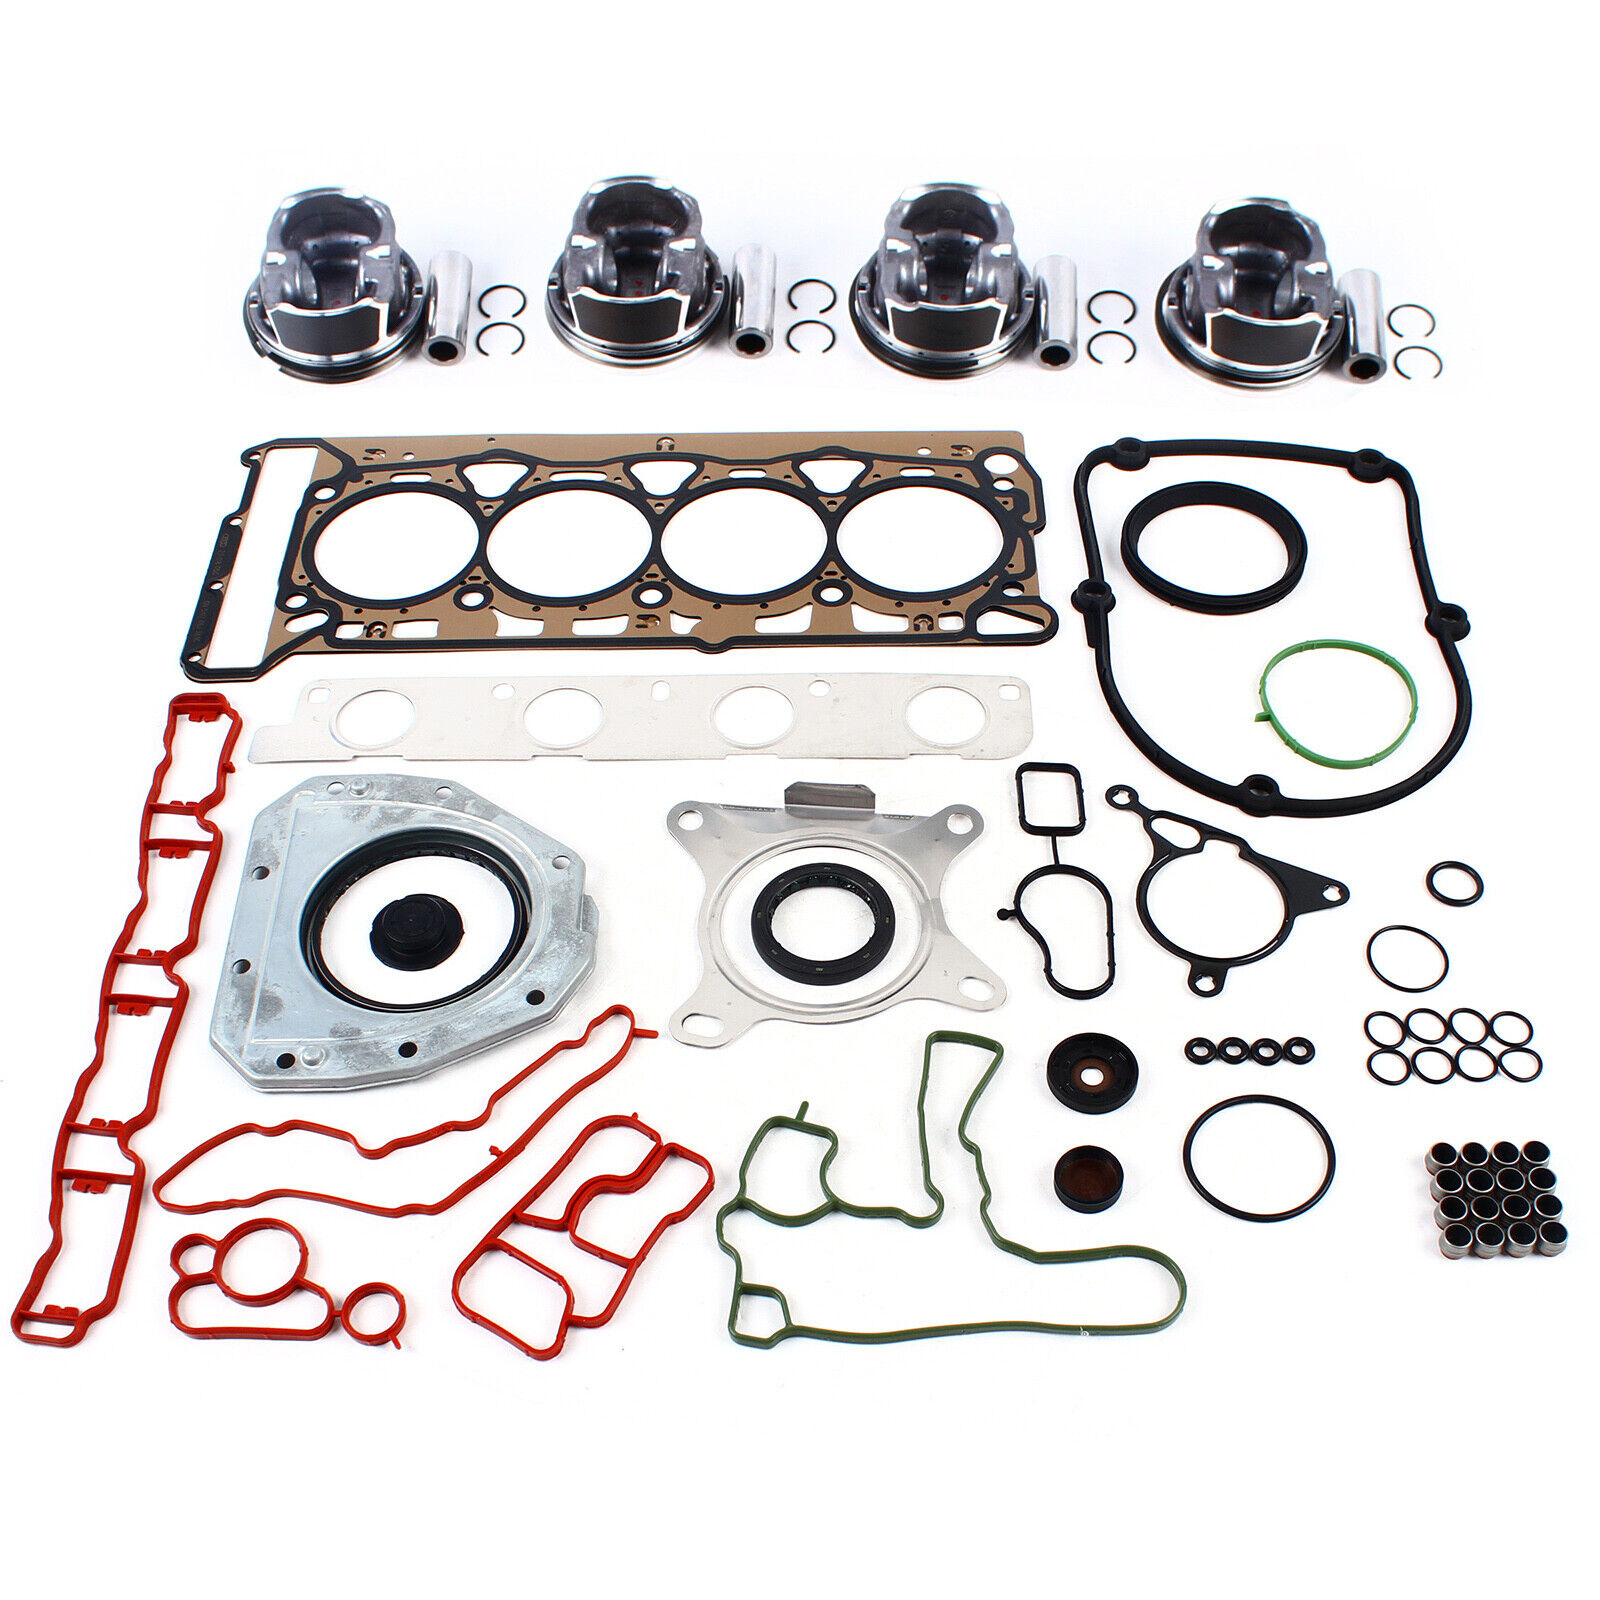 Engine Rebuild Overhaul Kit Max 68% OFF Piston Pin 21mm Volkswagen For Skoda NEW 2.0T Audi Long Beach Mall